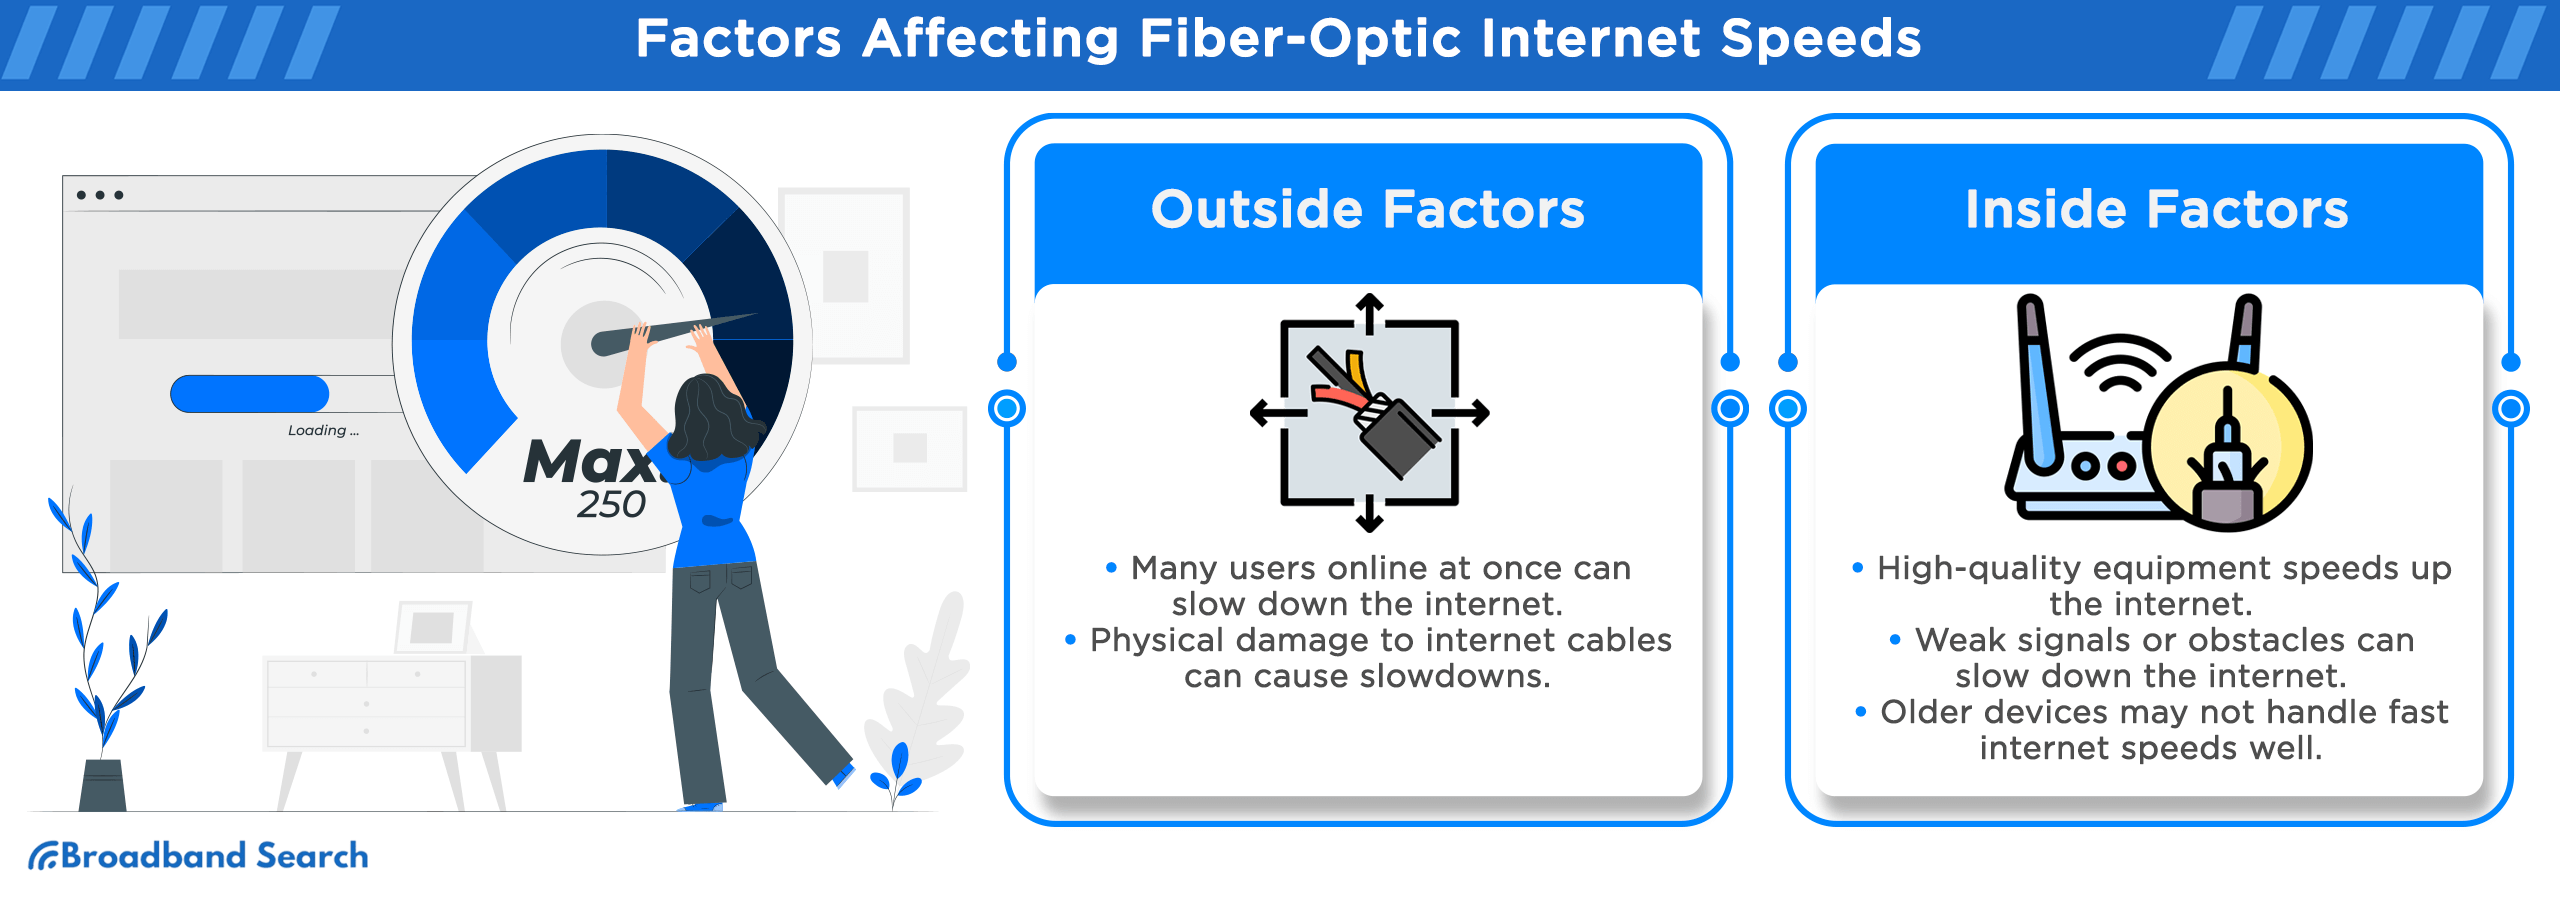 Factors affecting fiber-optic internet speeds